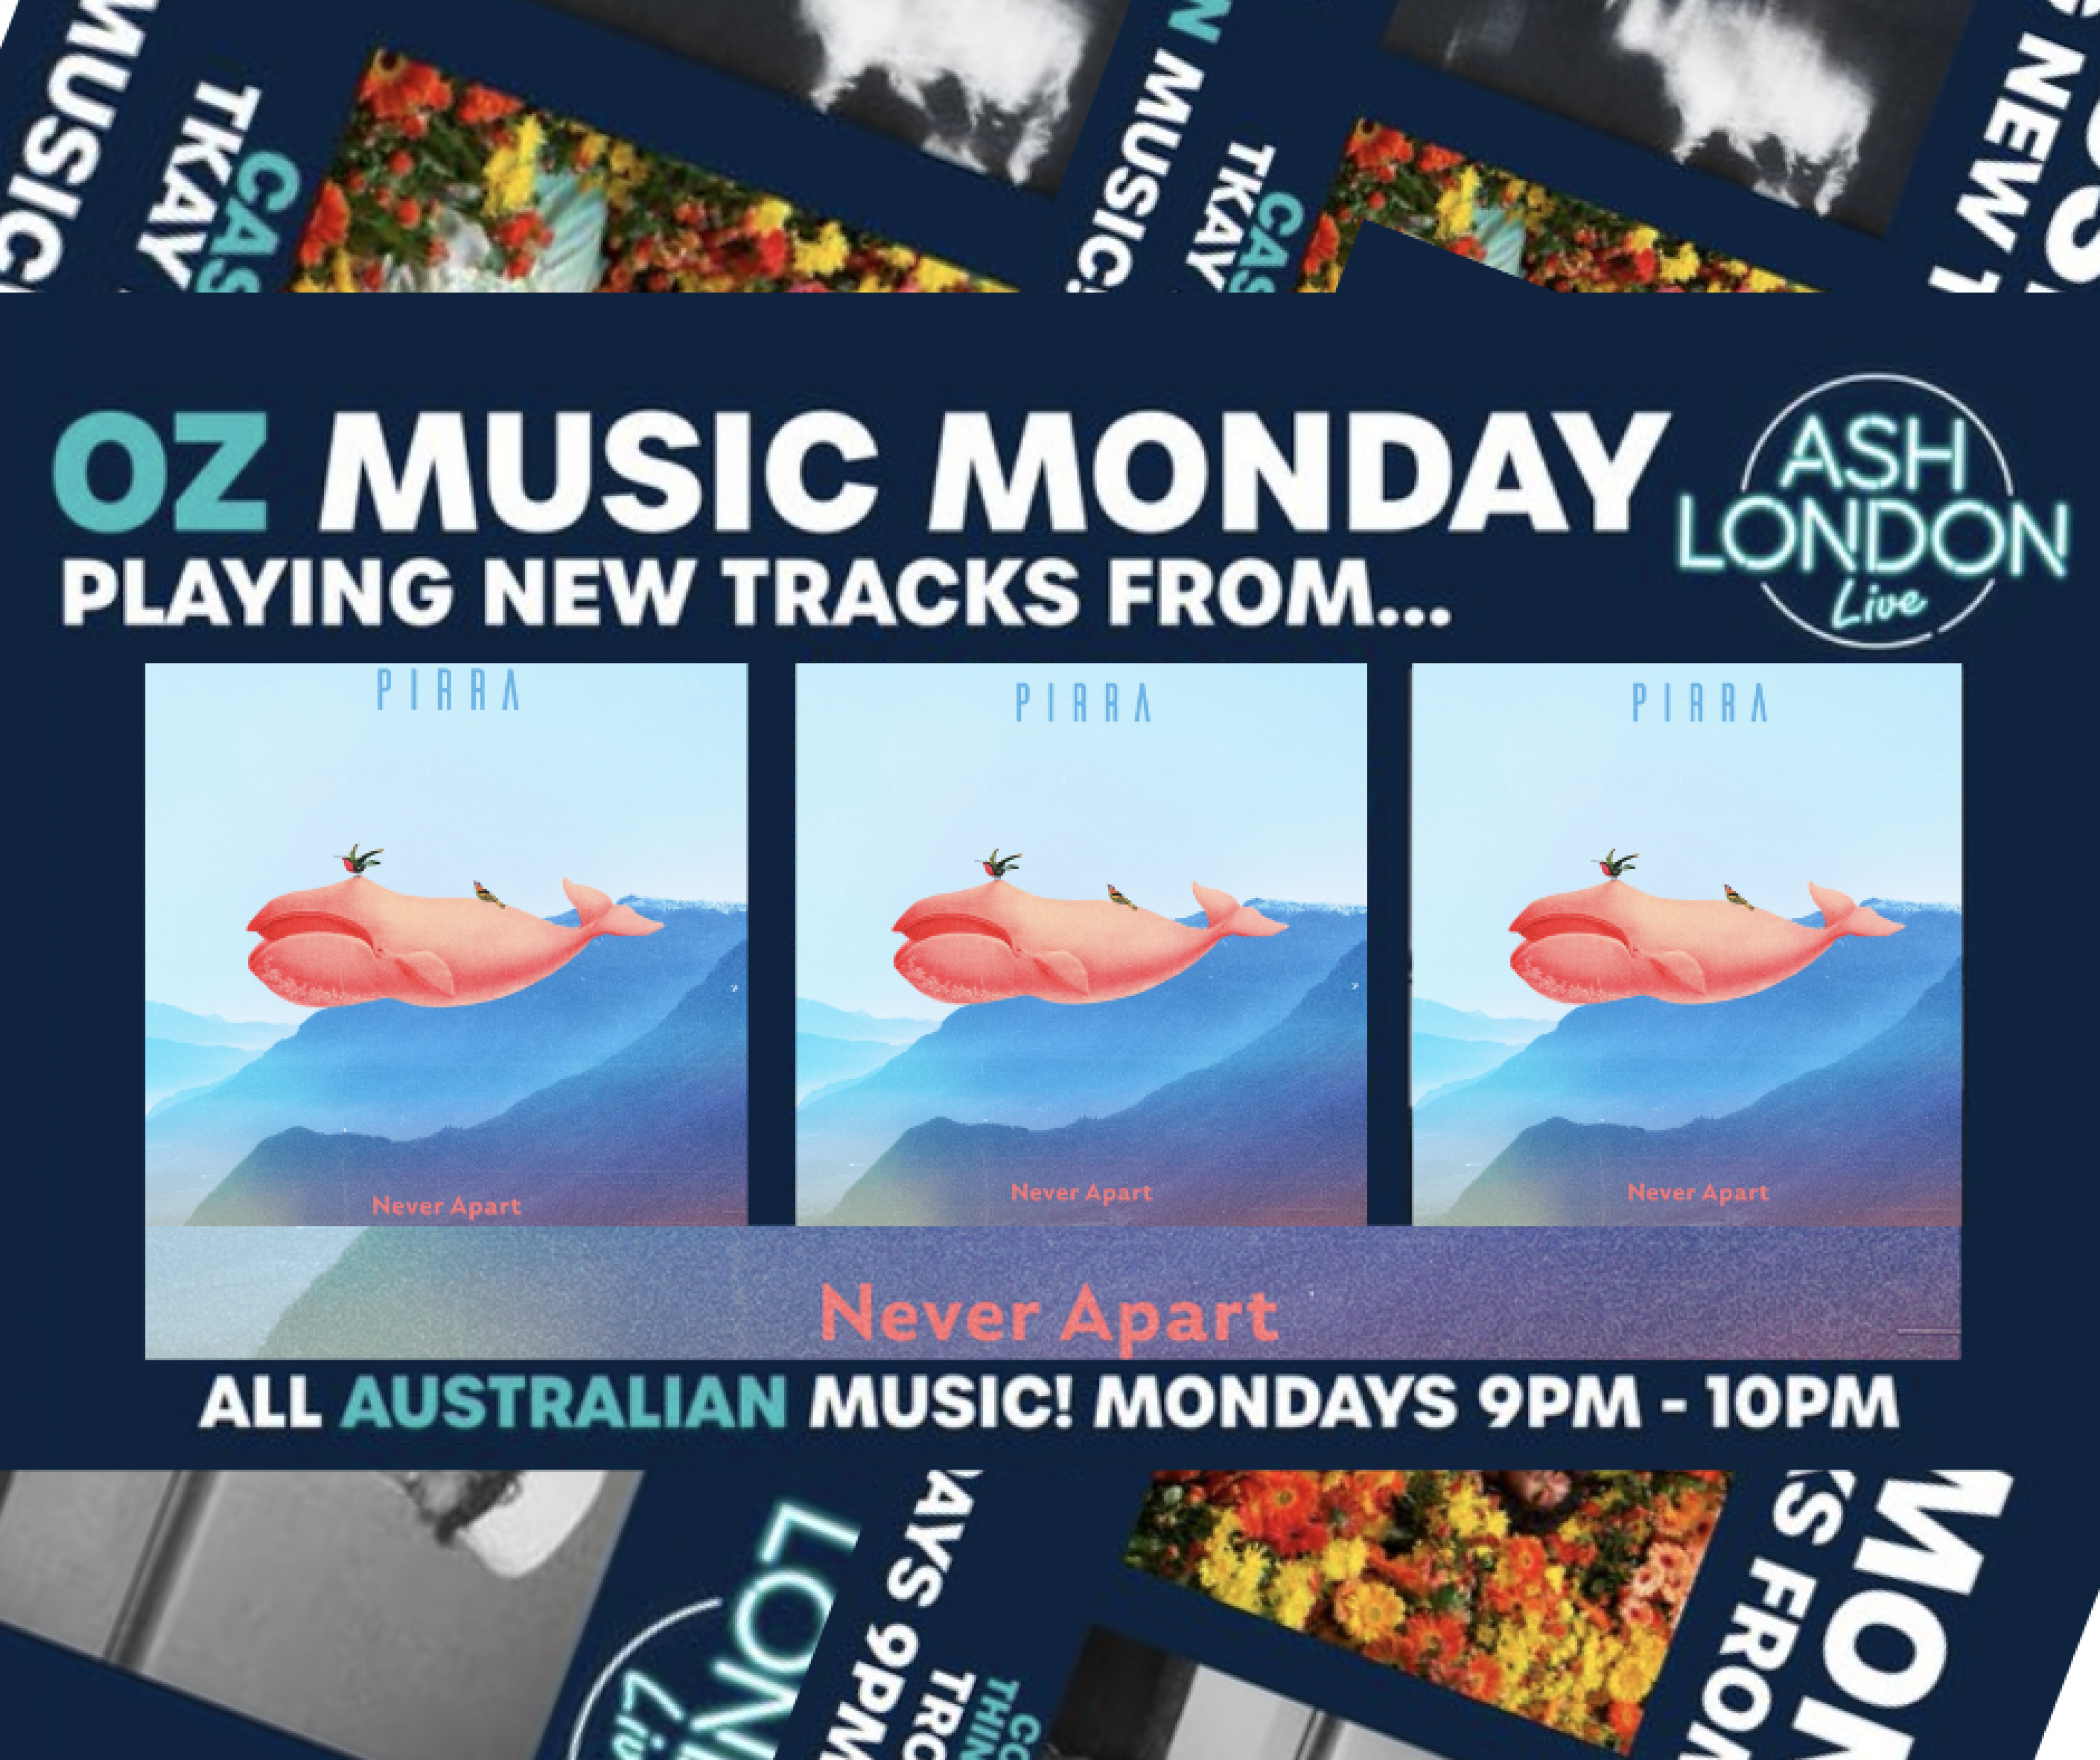 Pirra - 'Never Apart' Airplay via Ash London 'OZ Music Monday'